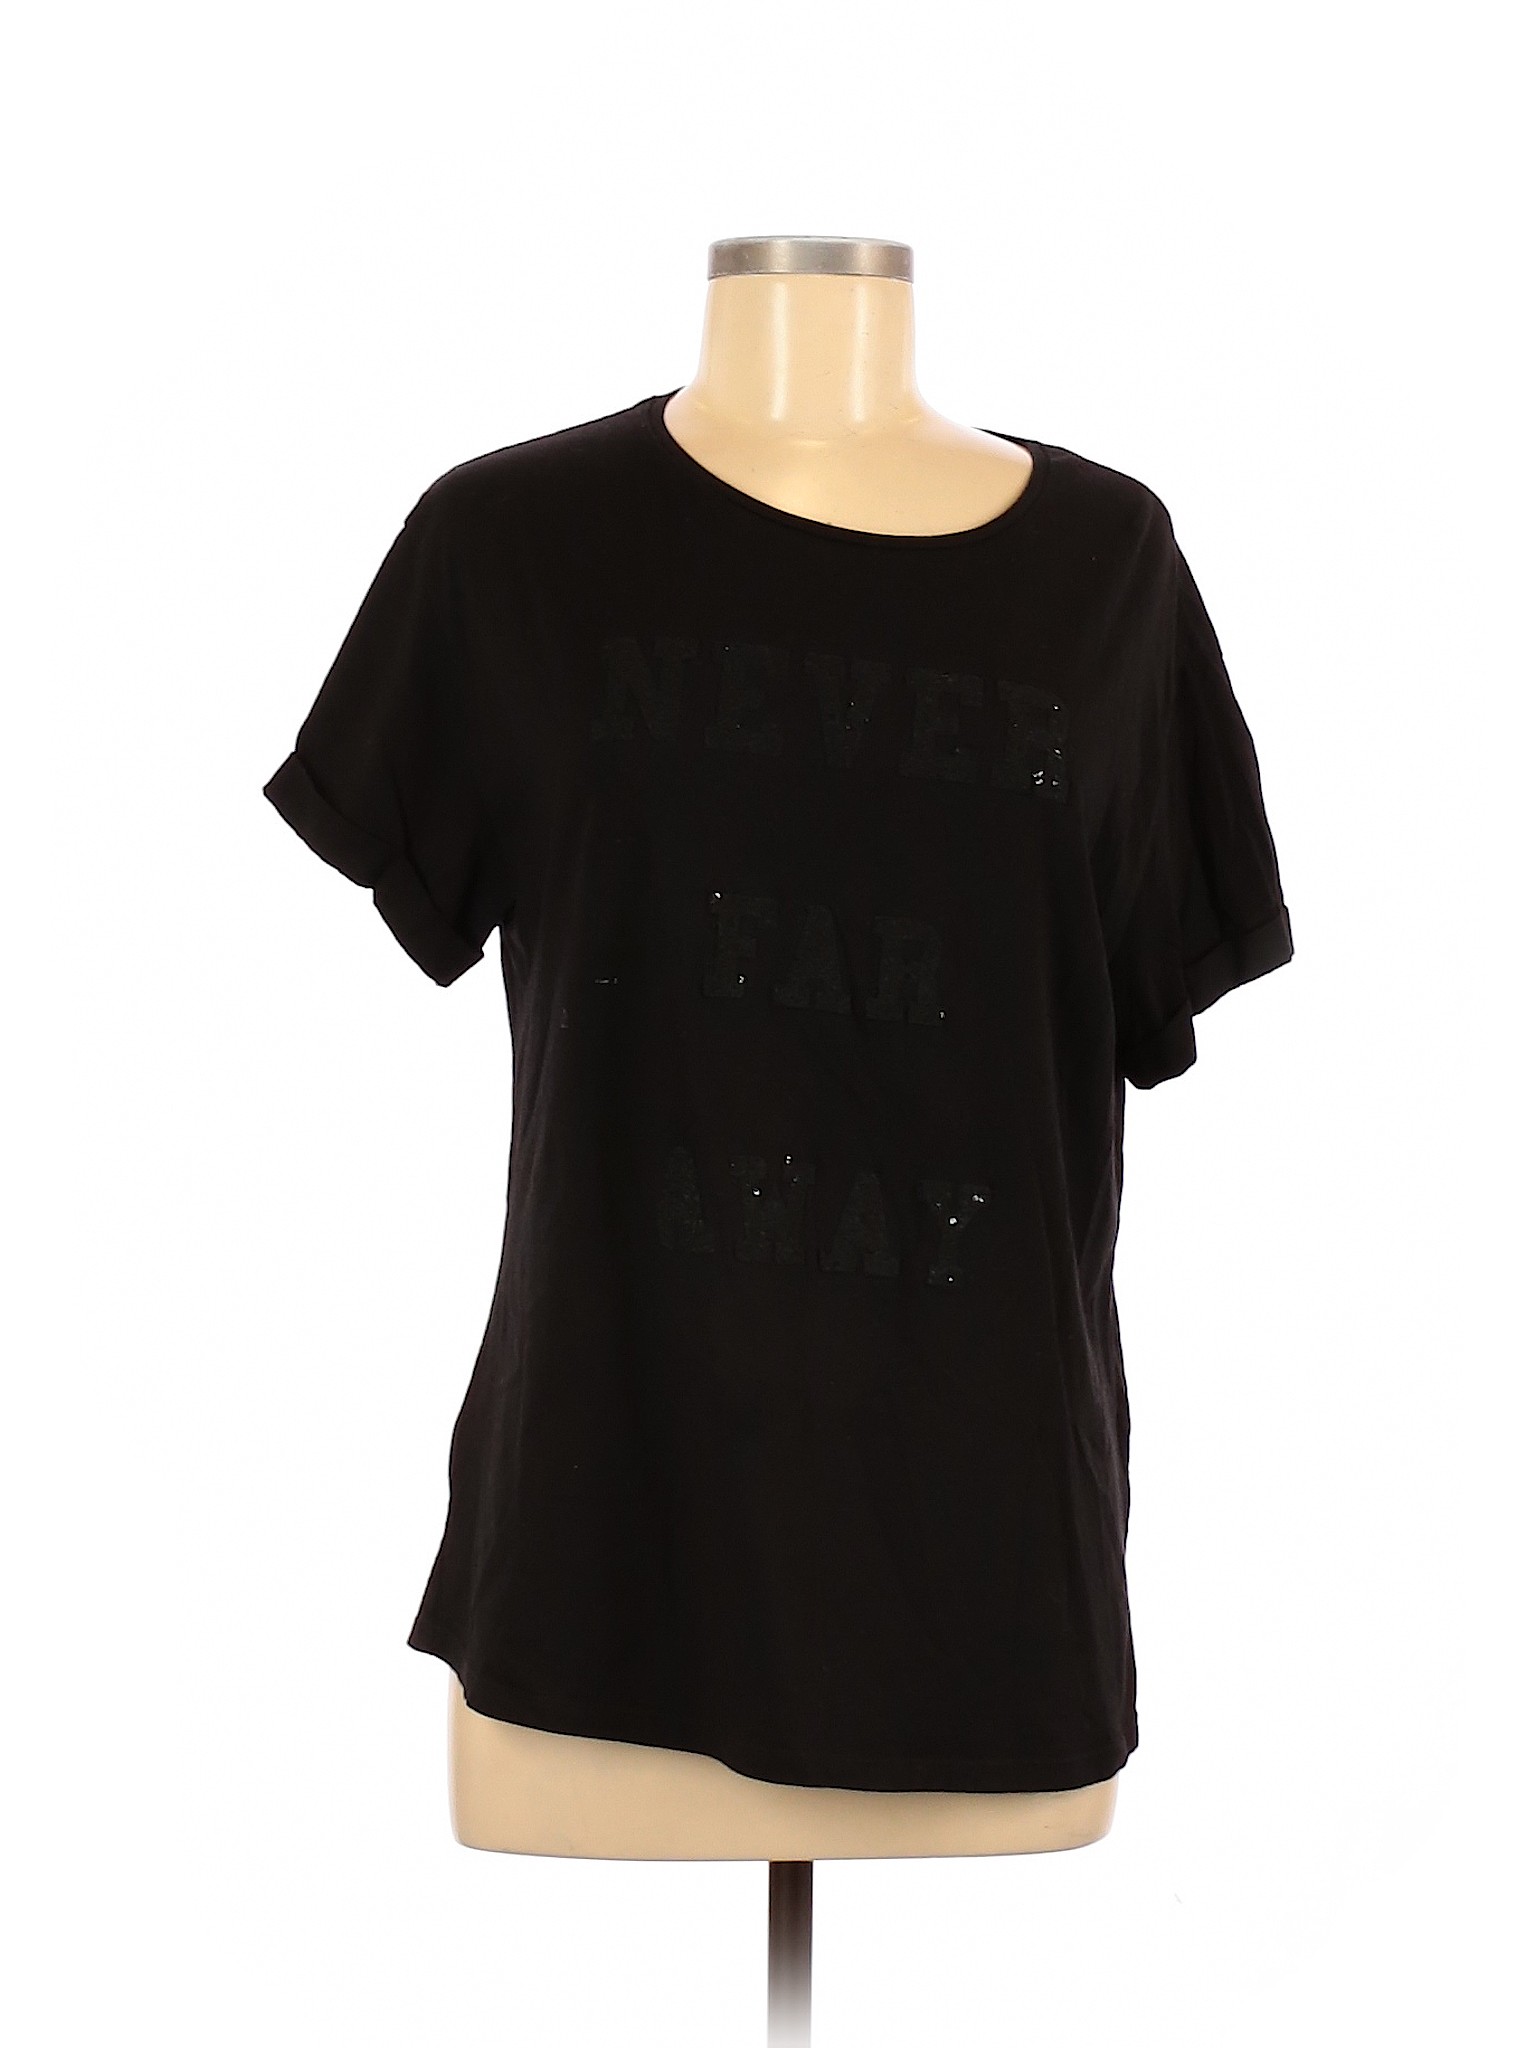 Zara Collection Women Black Short Sleeve T-Shirt 6 | eBay